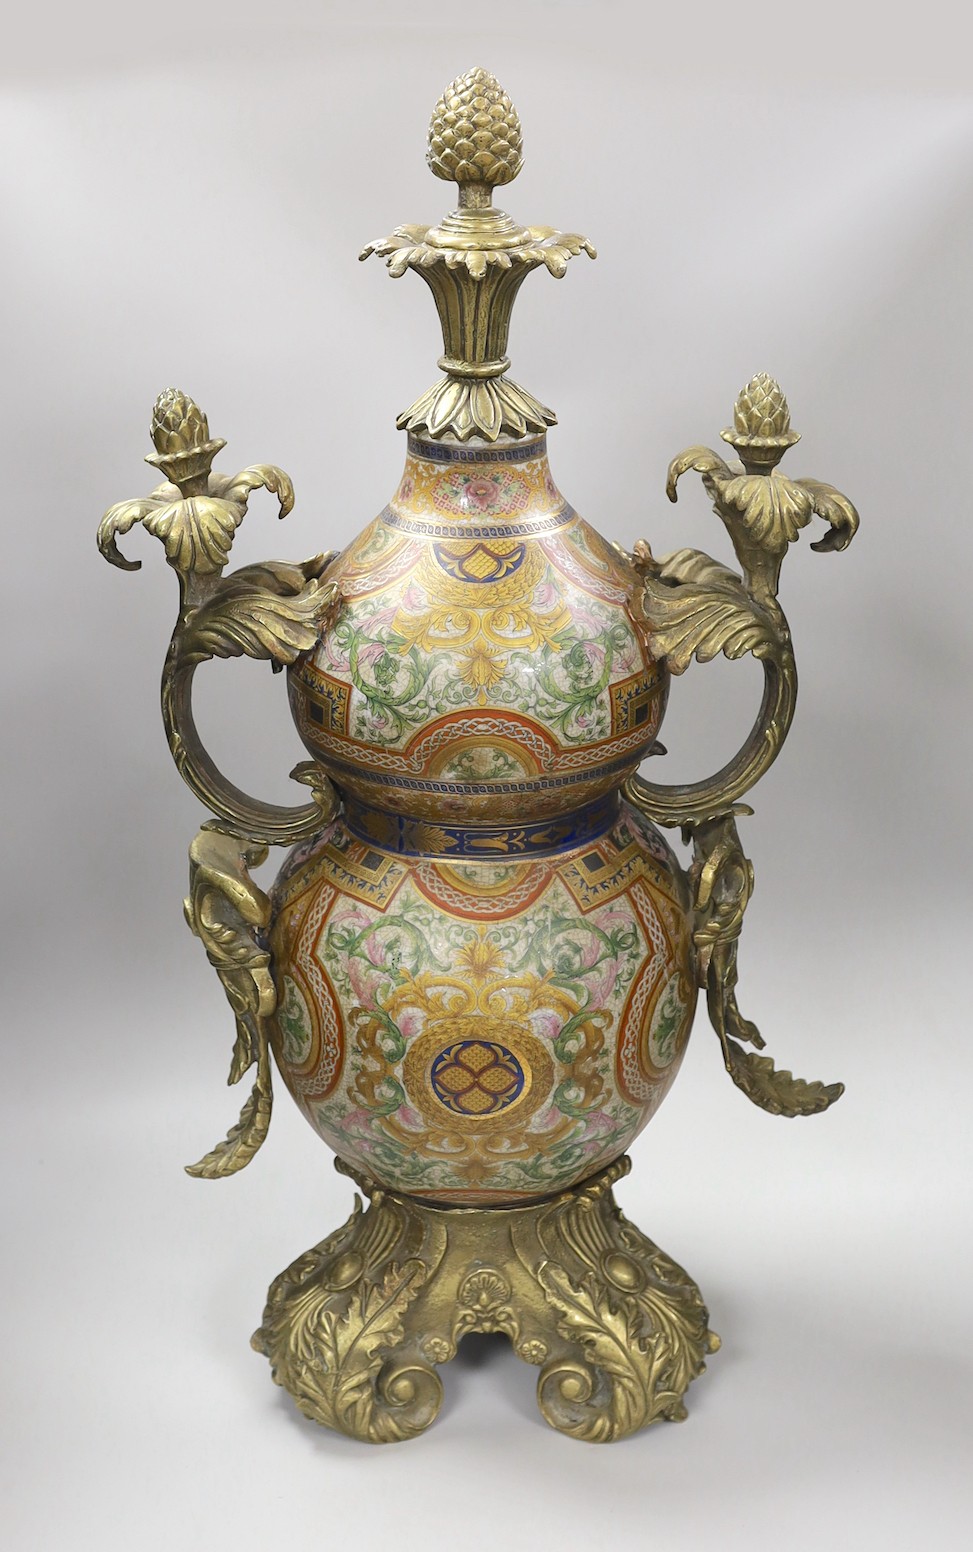 A large Louis XV-style ormolu-mounted ceramic urn. 69.5cm high